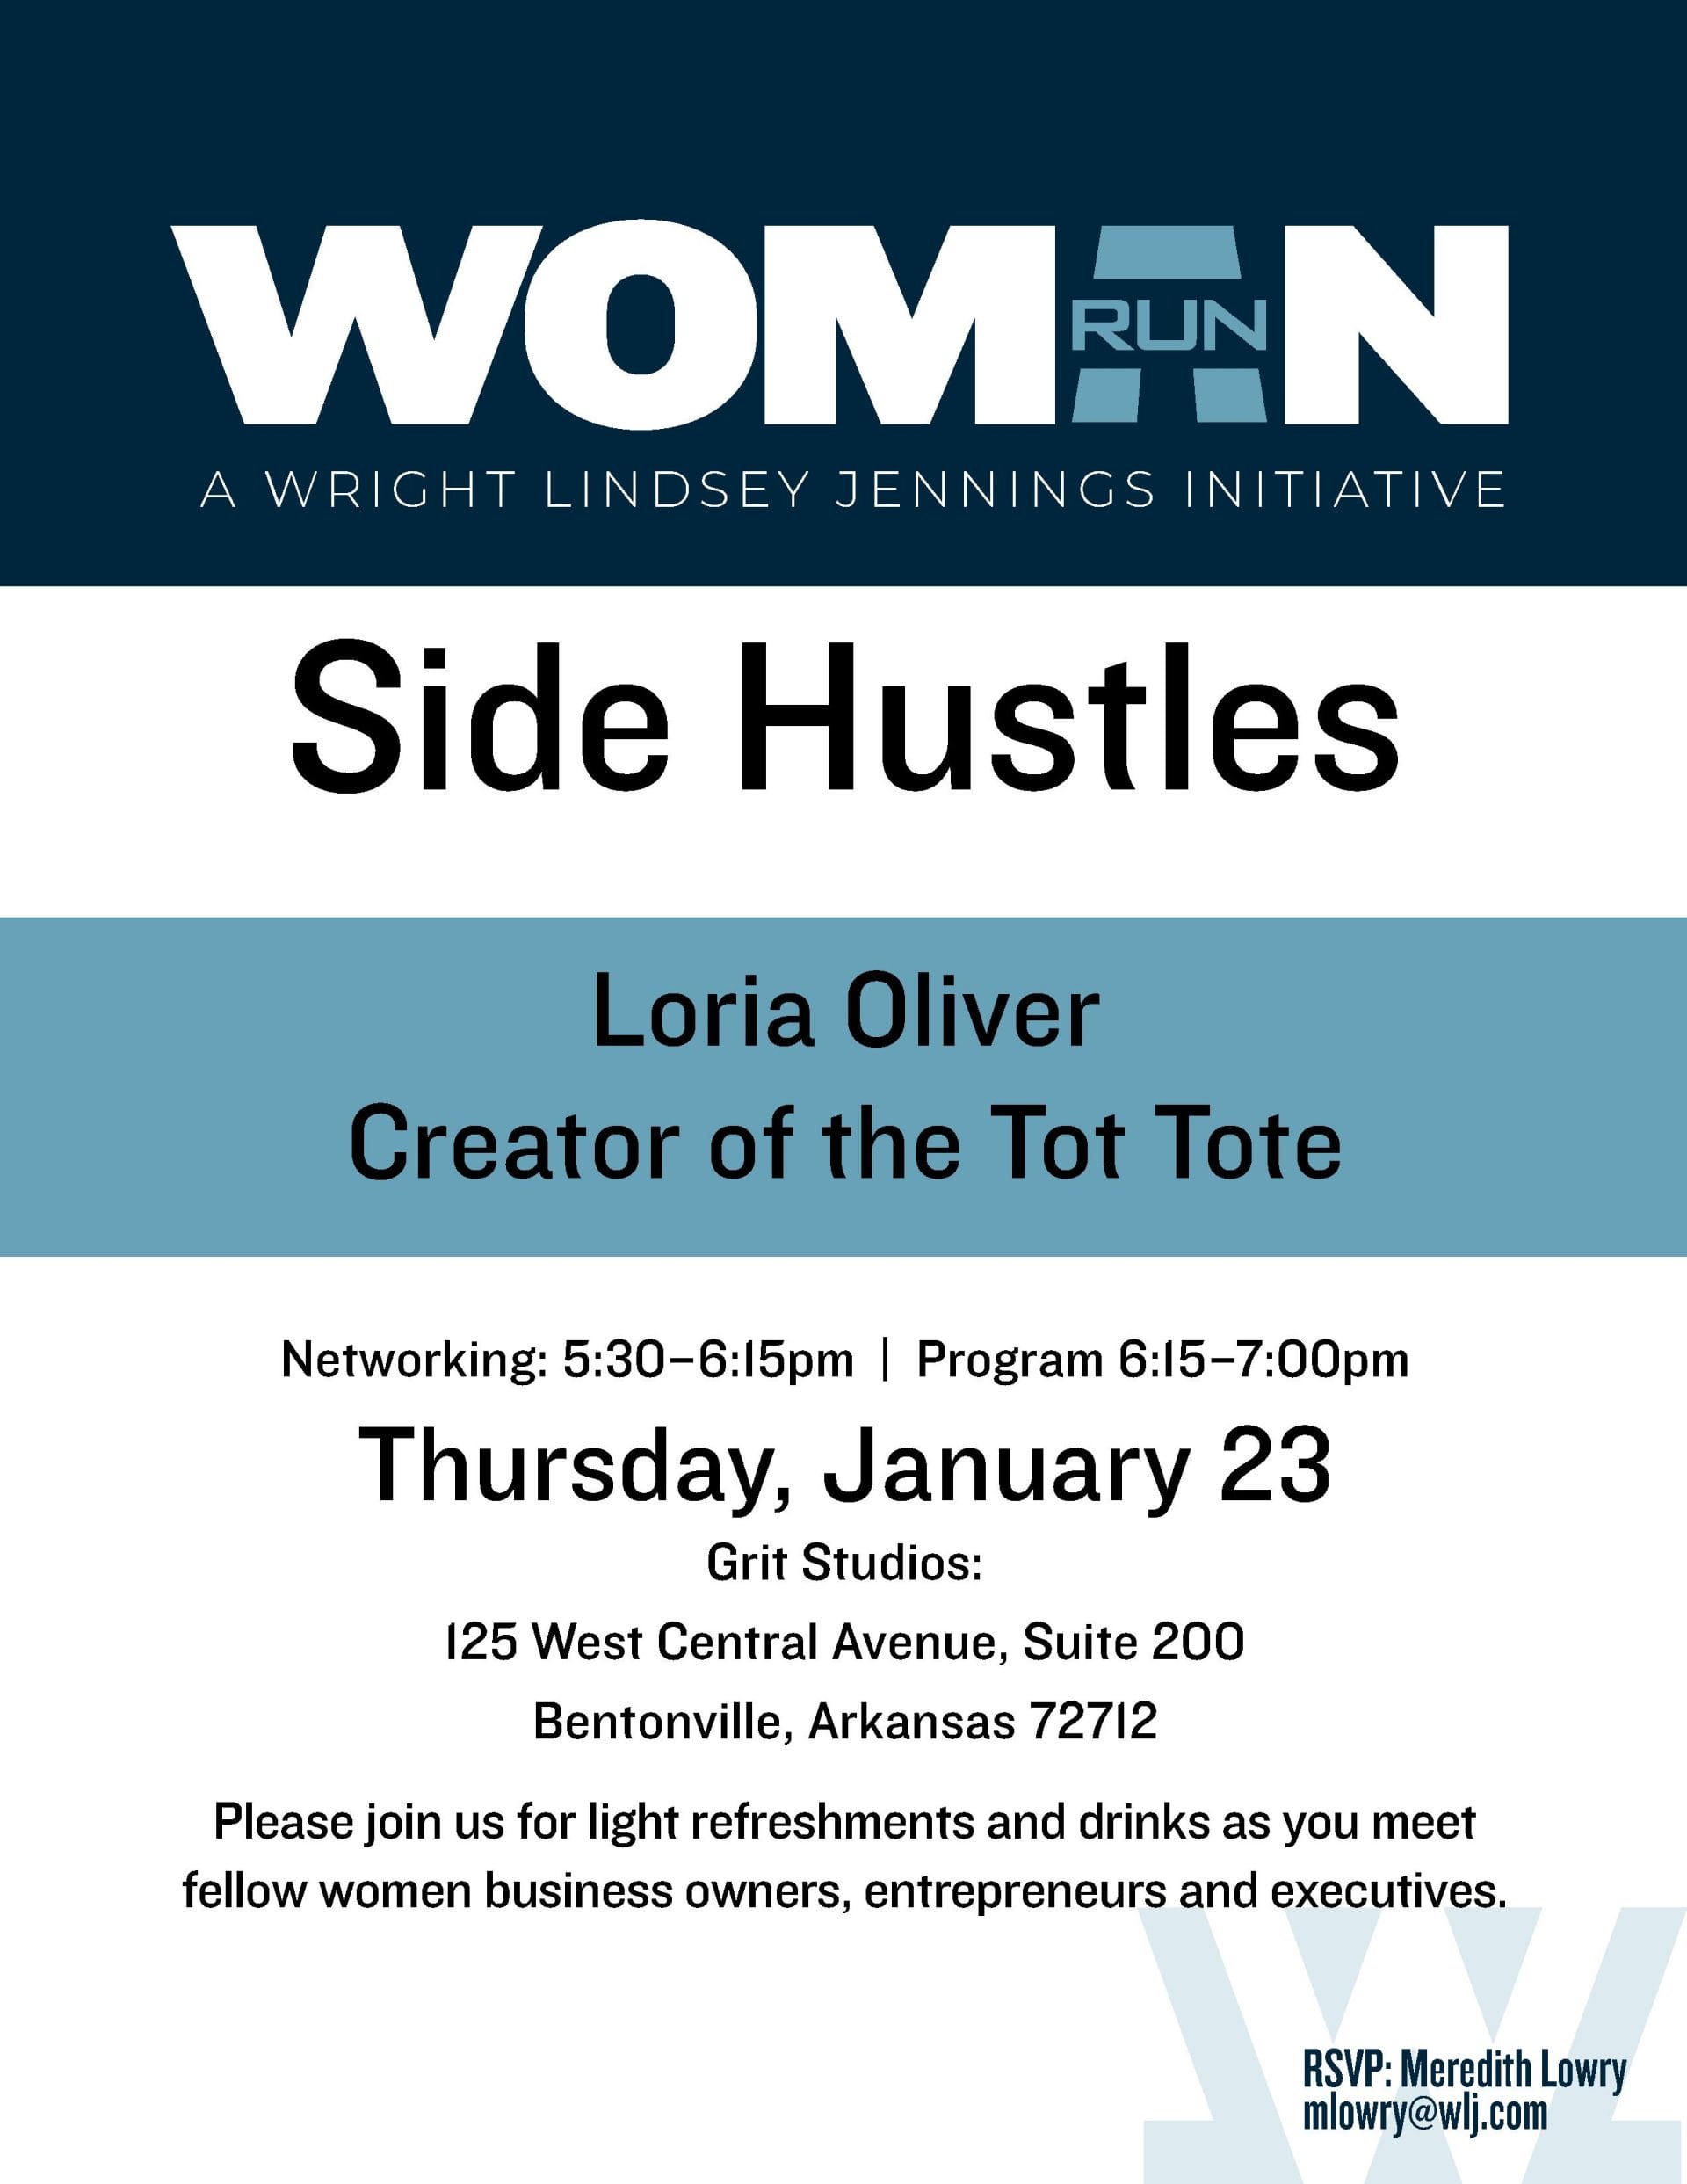 Woman Run Side Hustles event